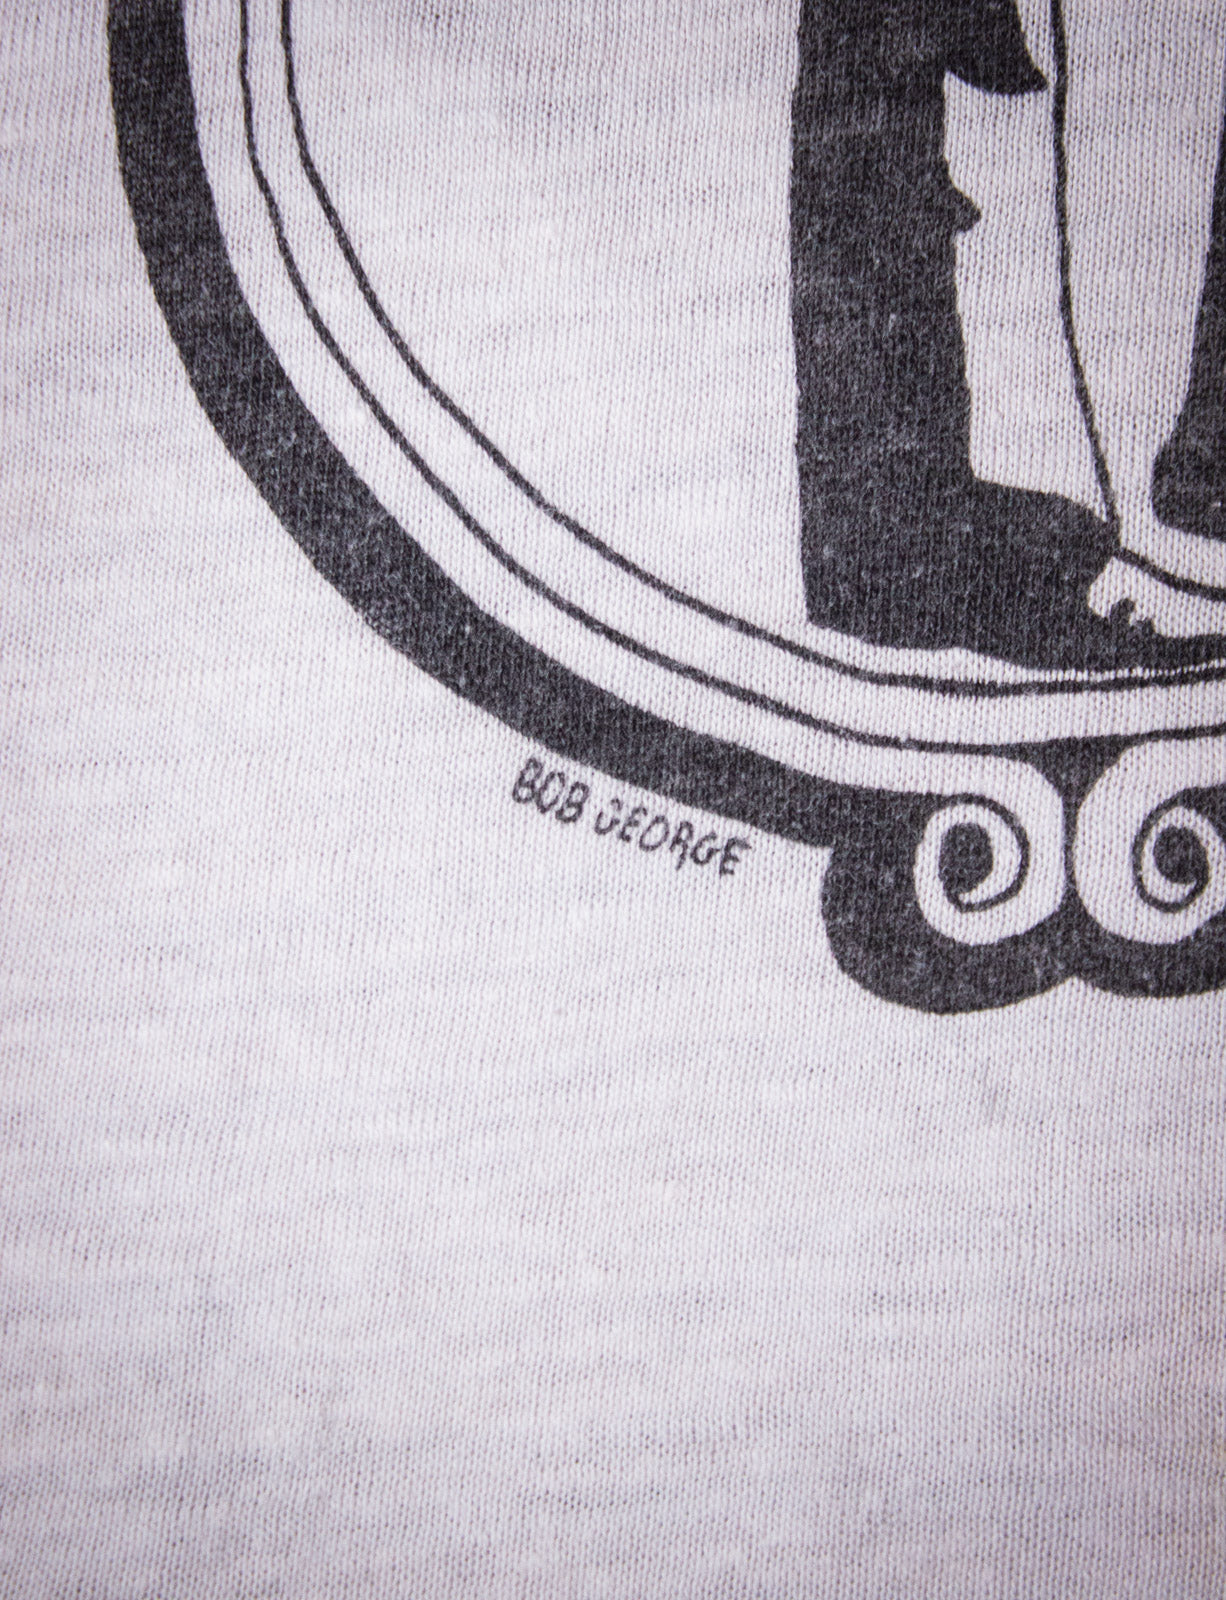 Vintage Joe Cocker Concert T Shirt 1972 White Small